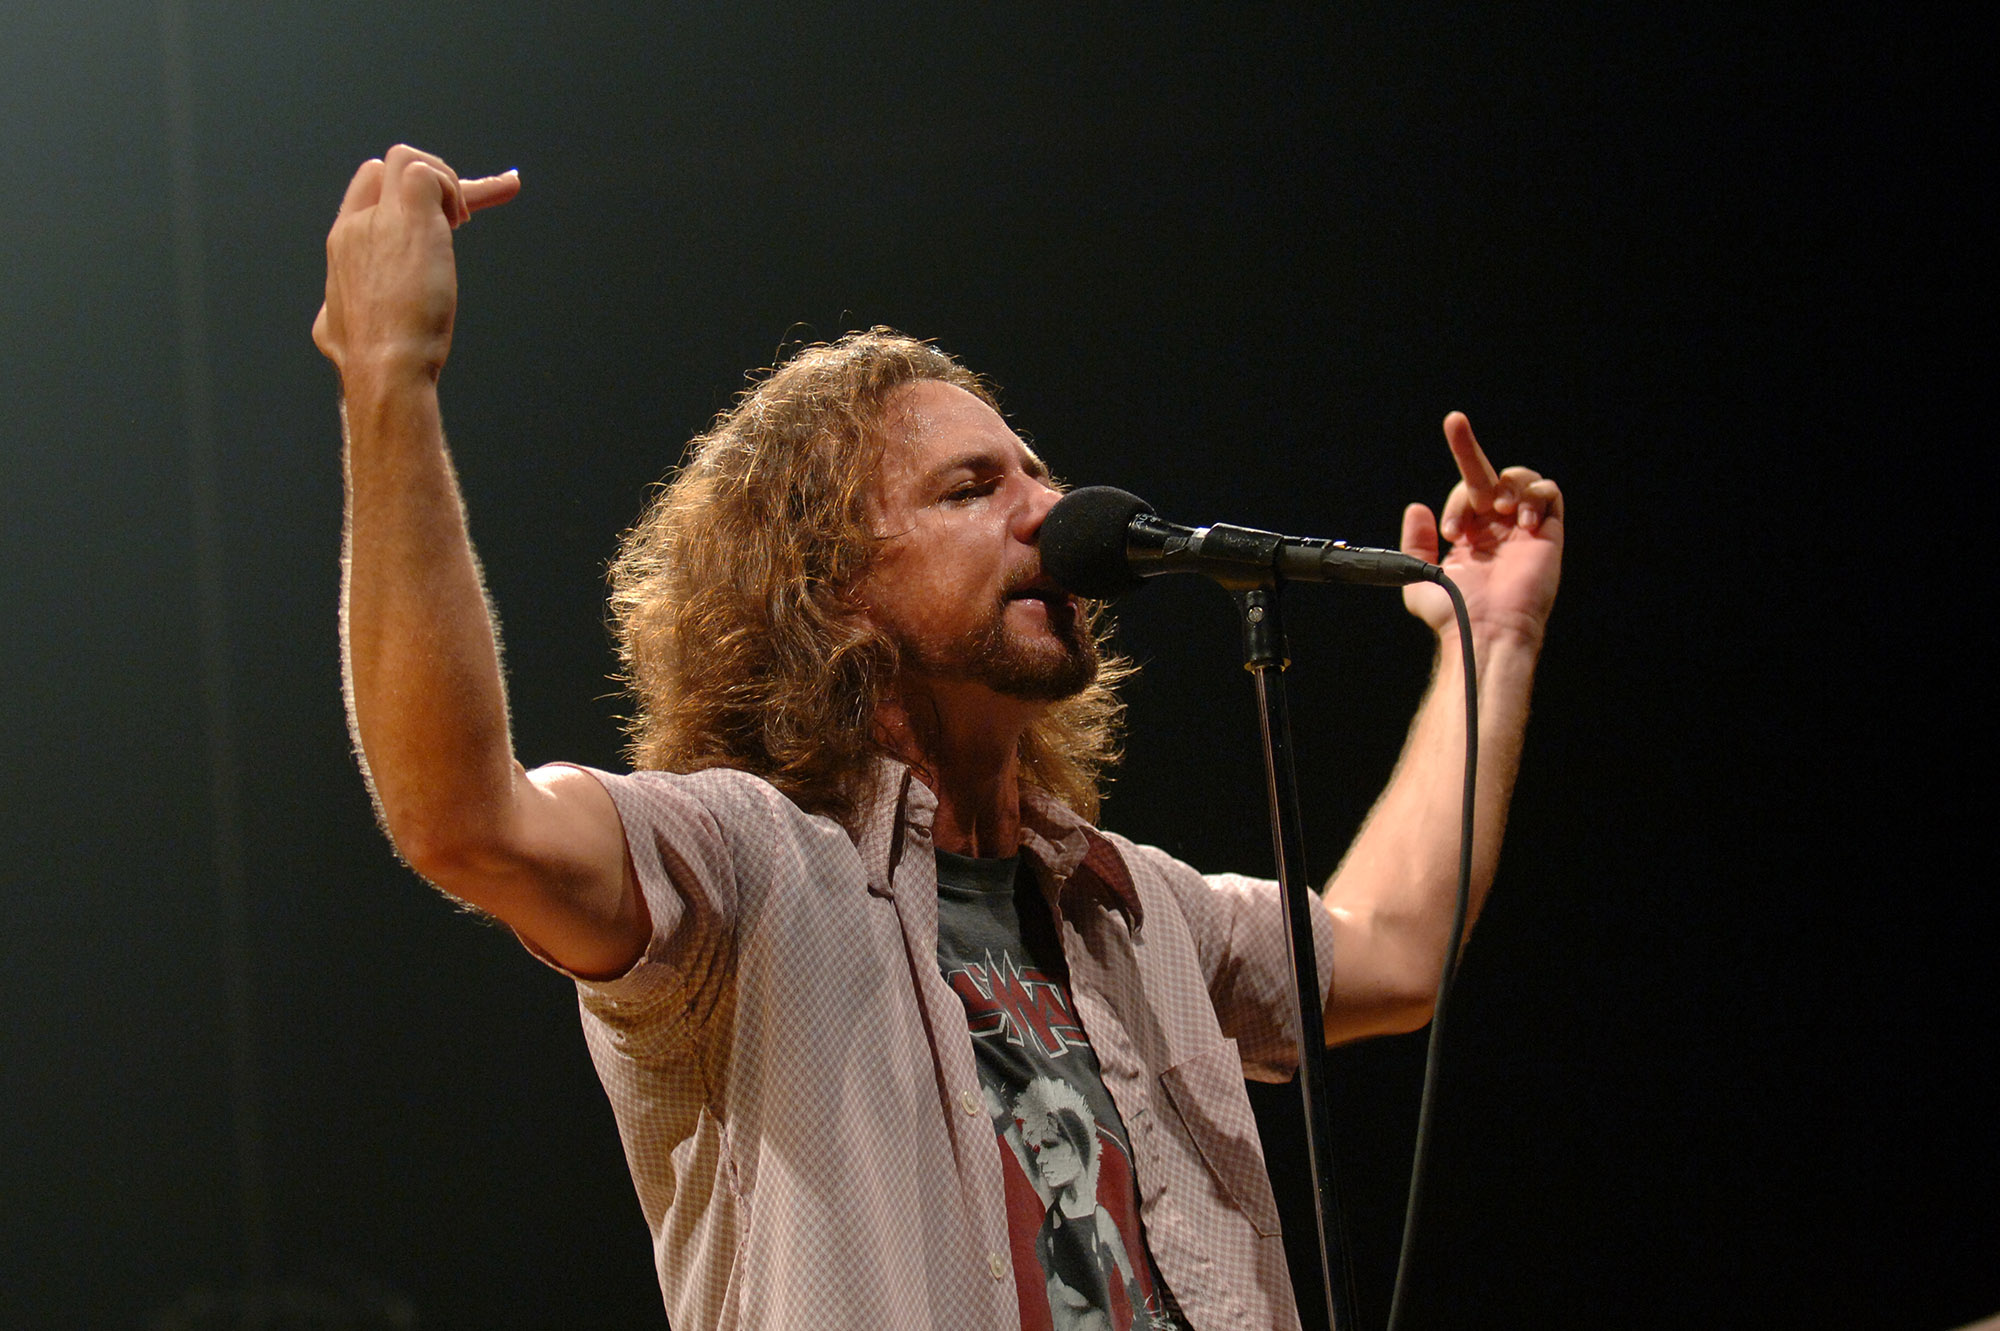 Milan Italy,17 September 2006,Live concert of Pearl Jam at the DatchForum Assago: The singer of Pearl Jam, Eddie Vedder, during the concert